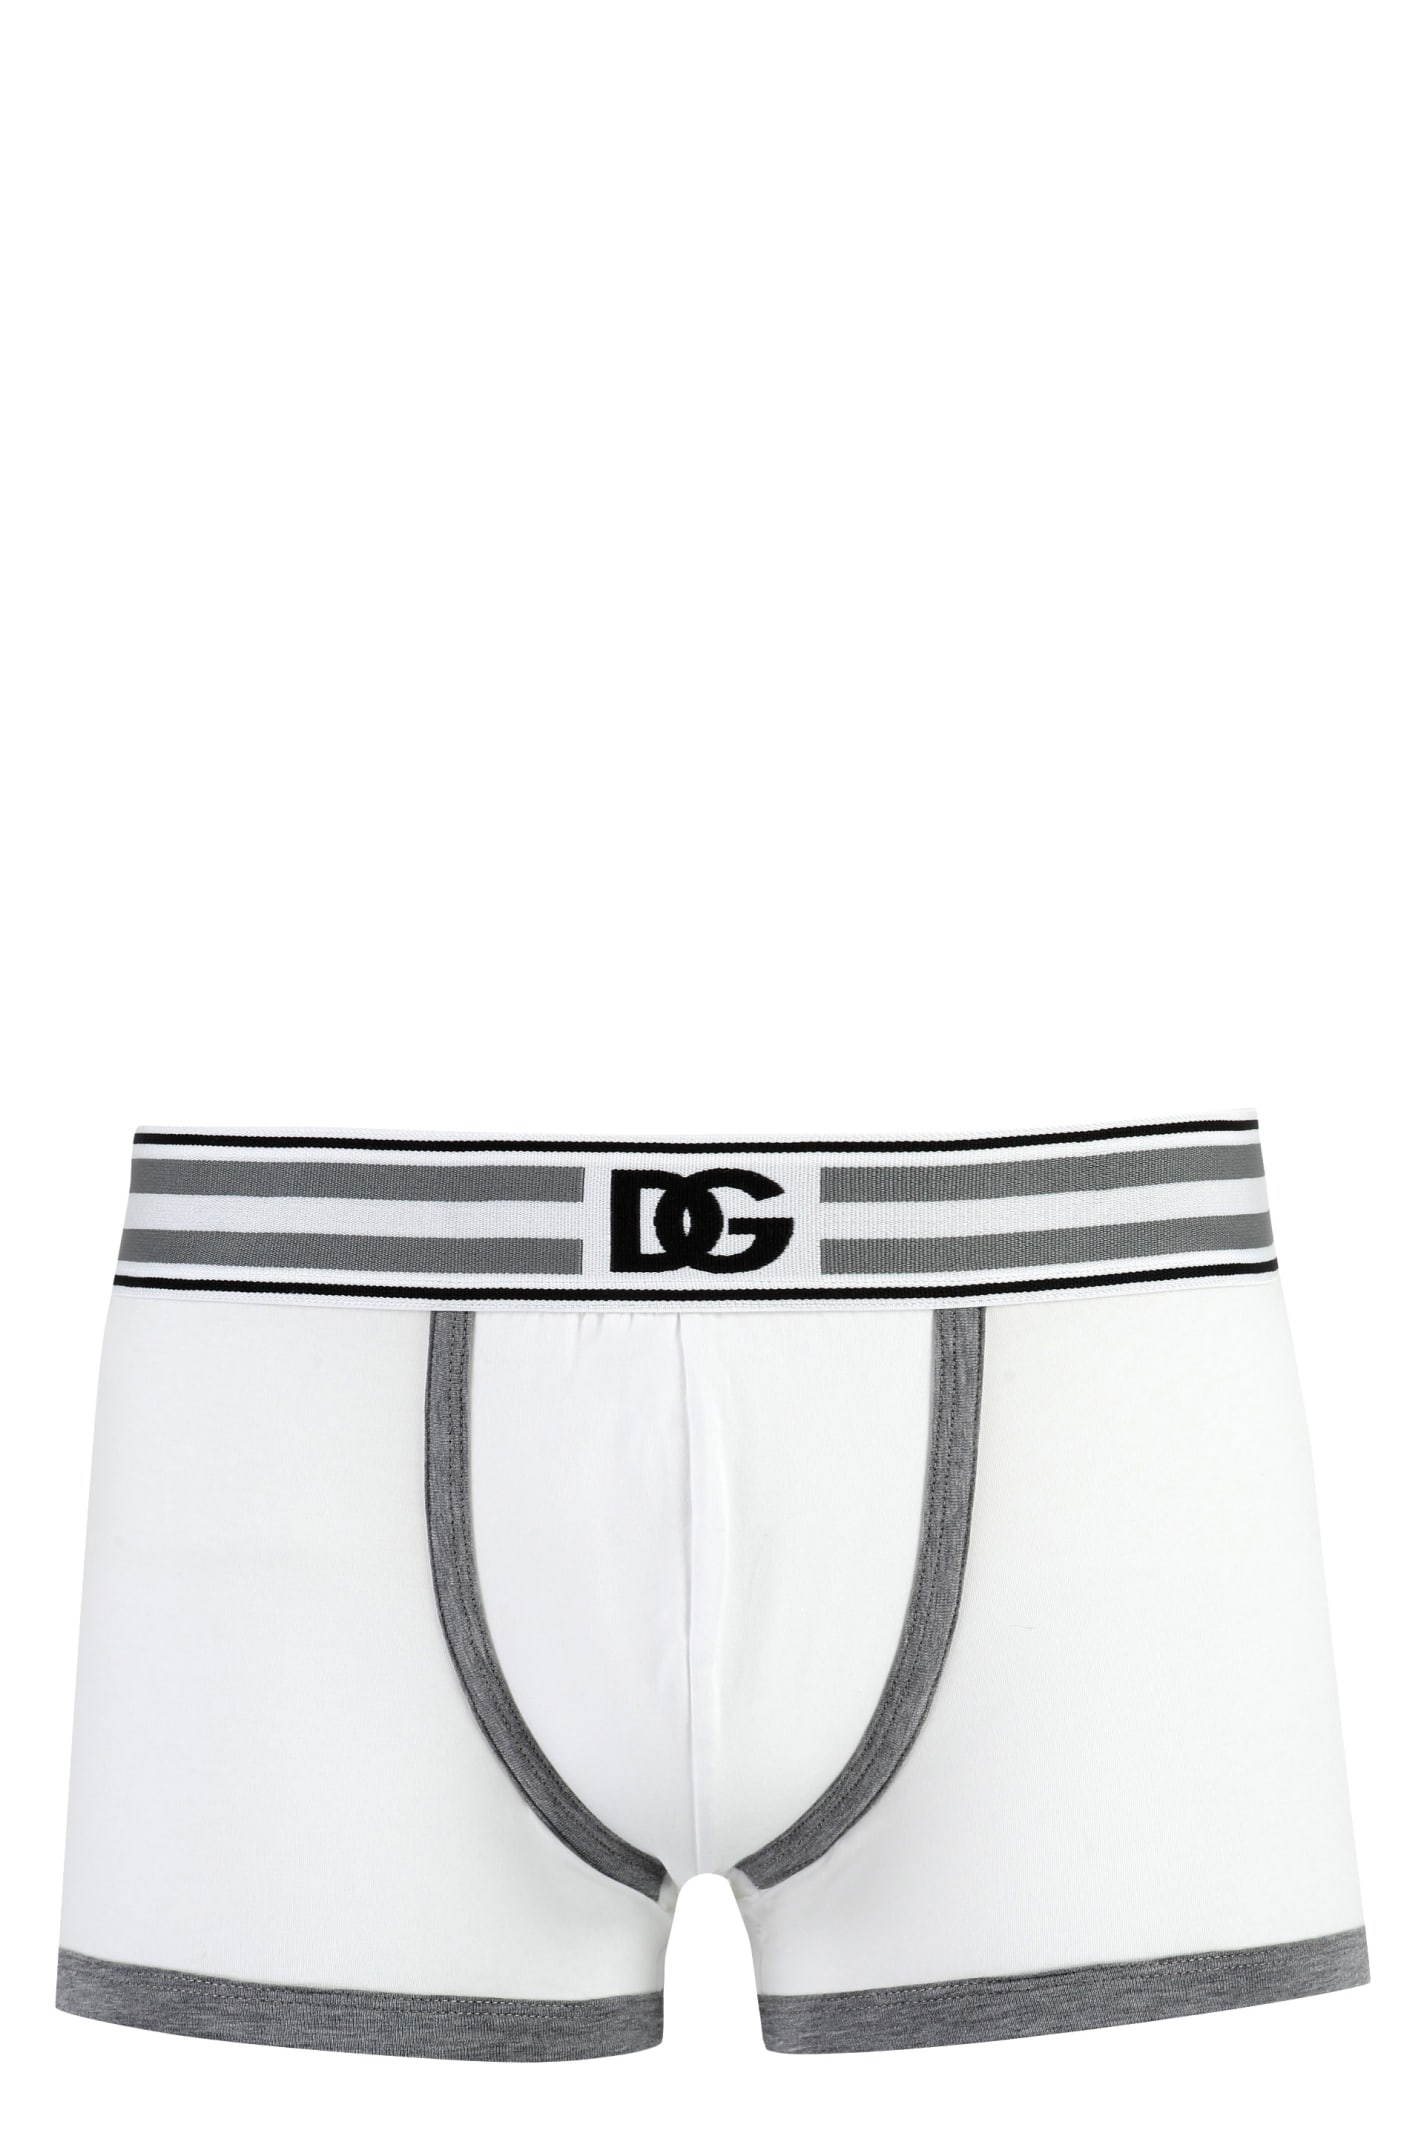 Dolce & Gabbana Logoed Elastic Band Cotton Trunks In White